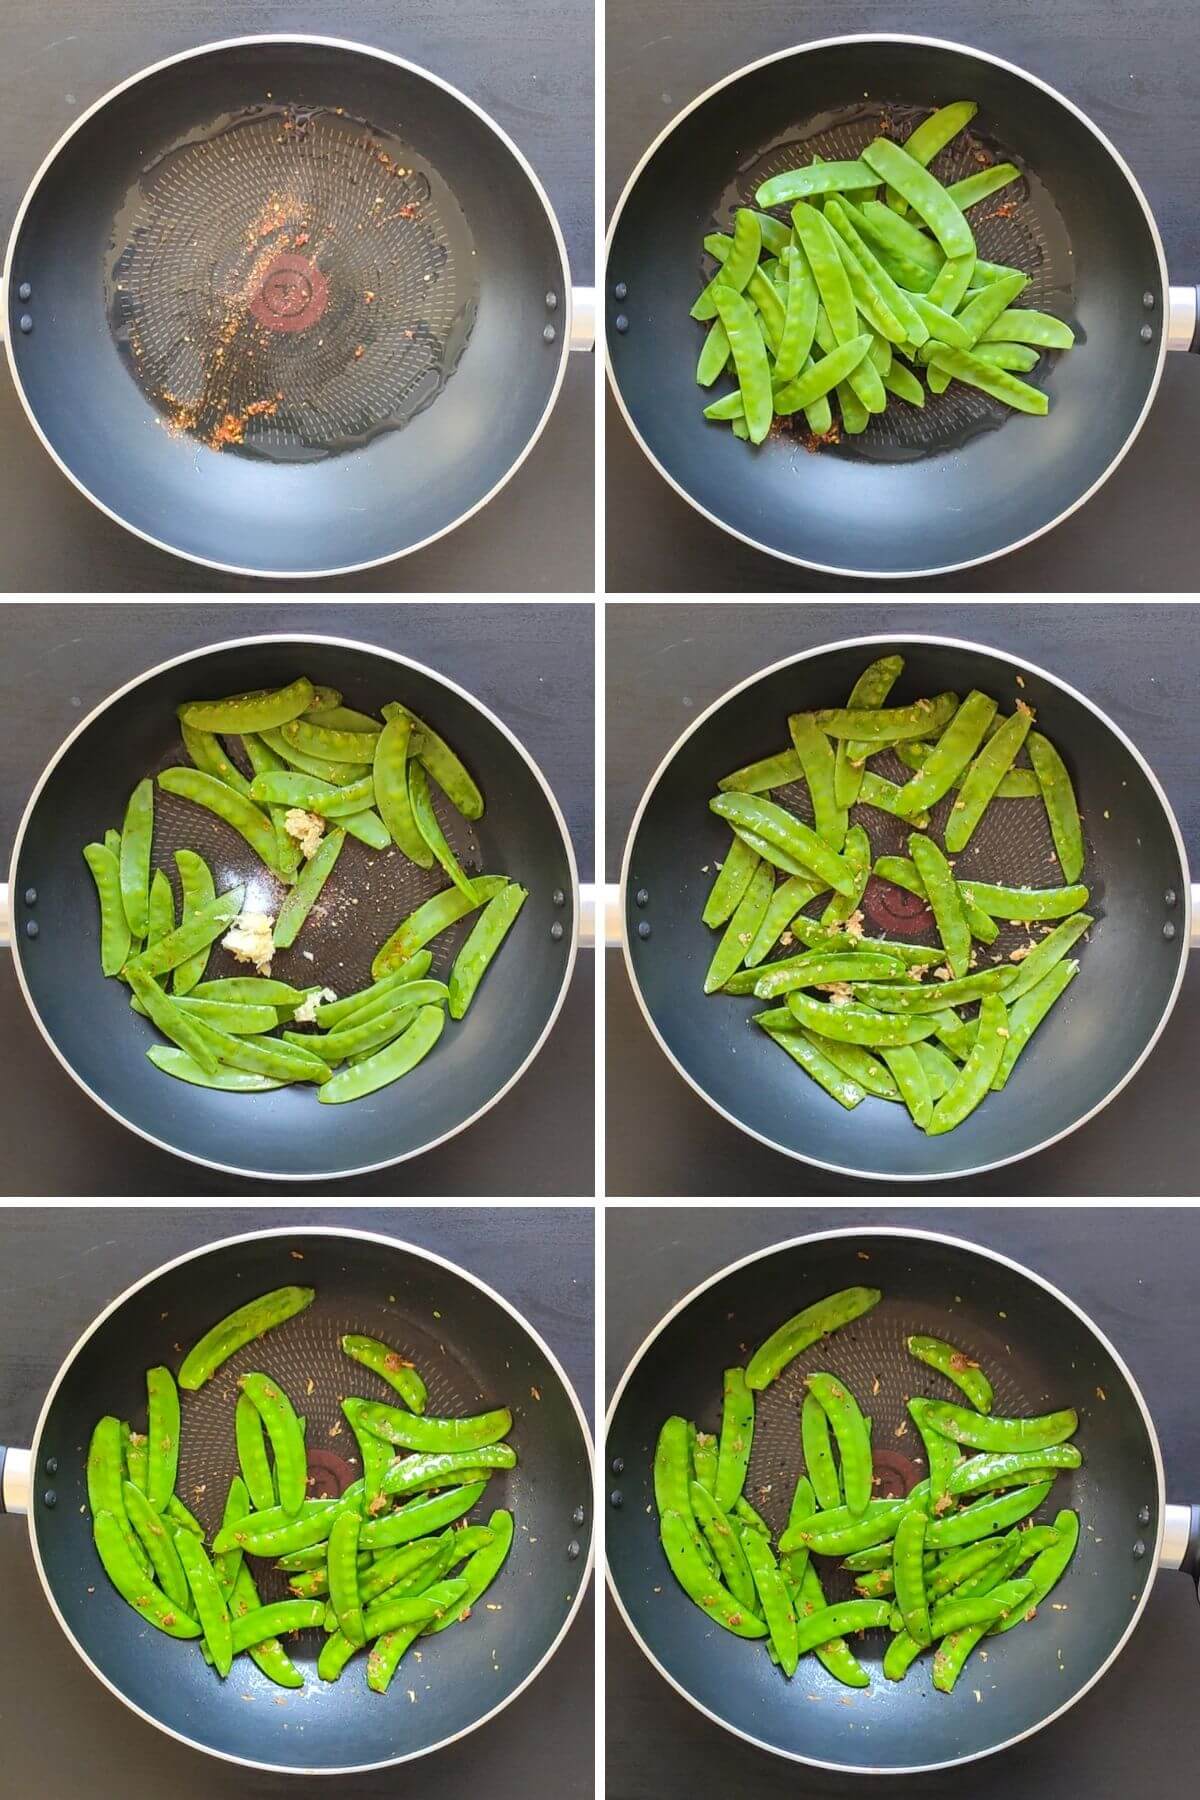 Steps to make stir fried snow peas